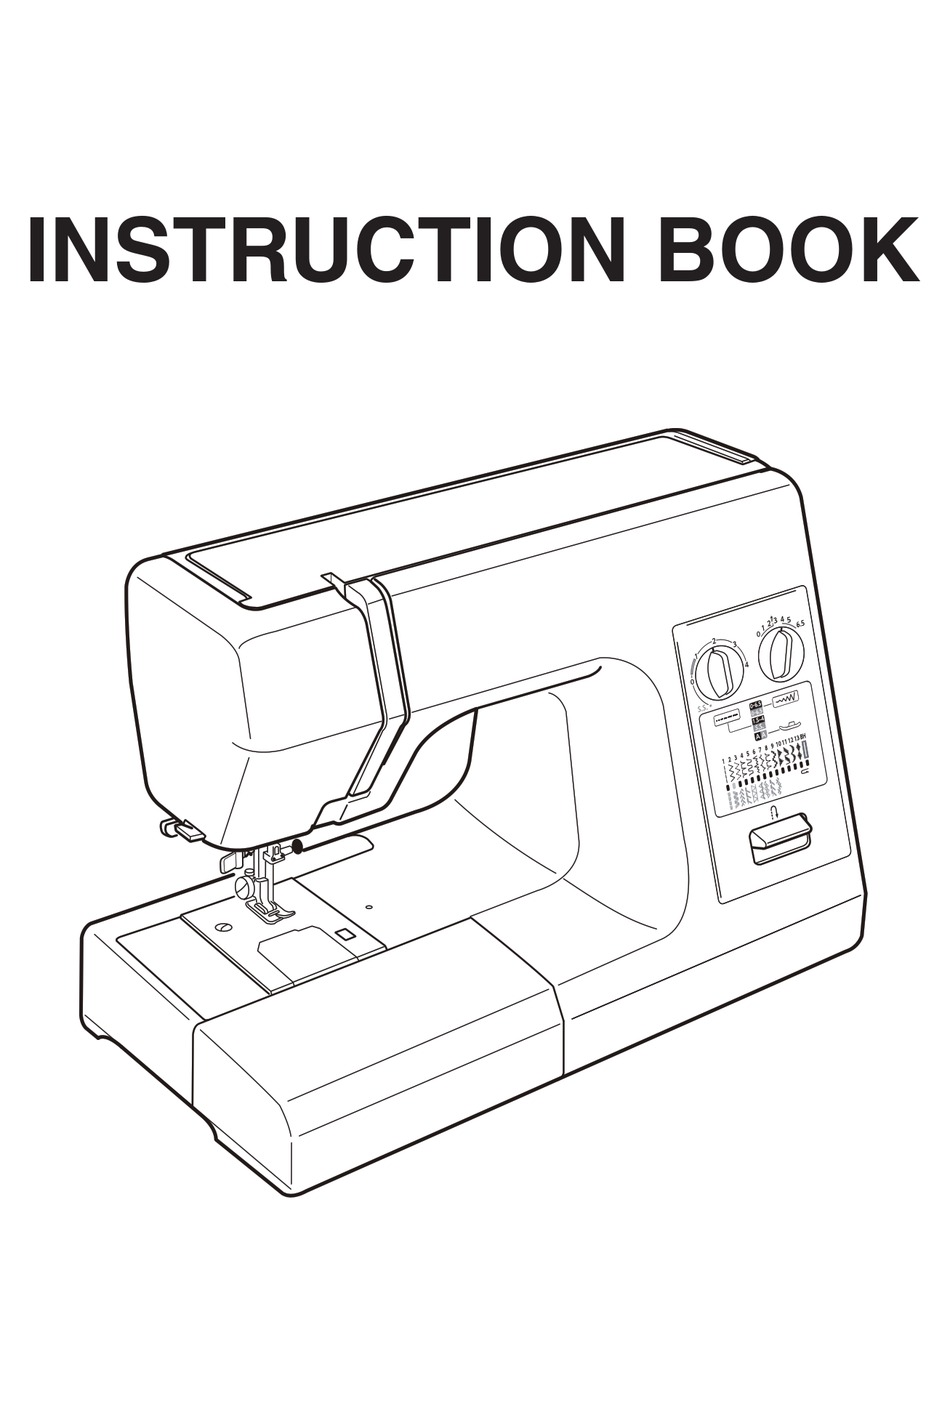 JANOME INSTRUCTION BOOK Pdf Download | ManualsLib